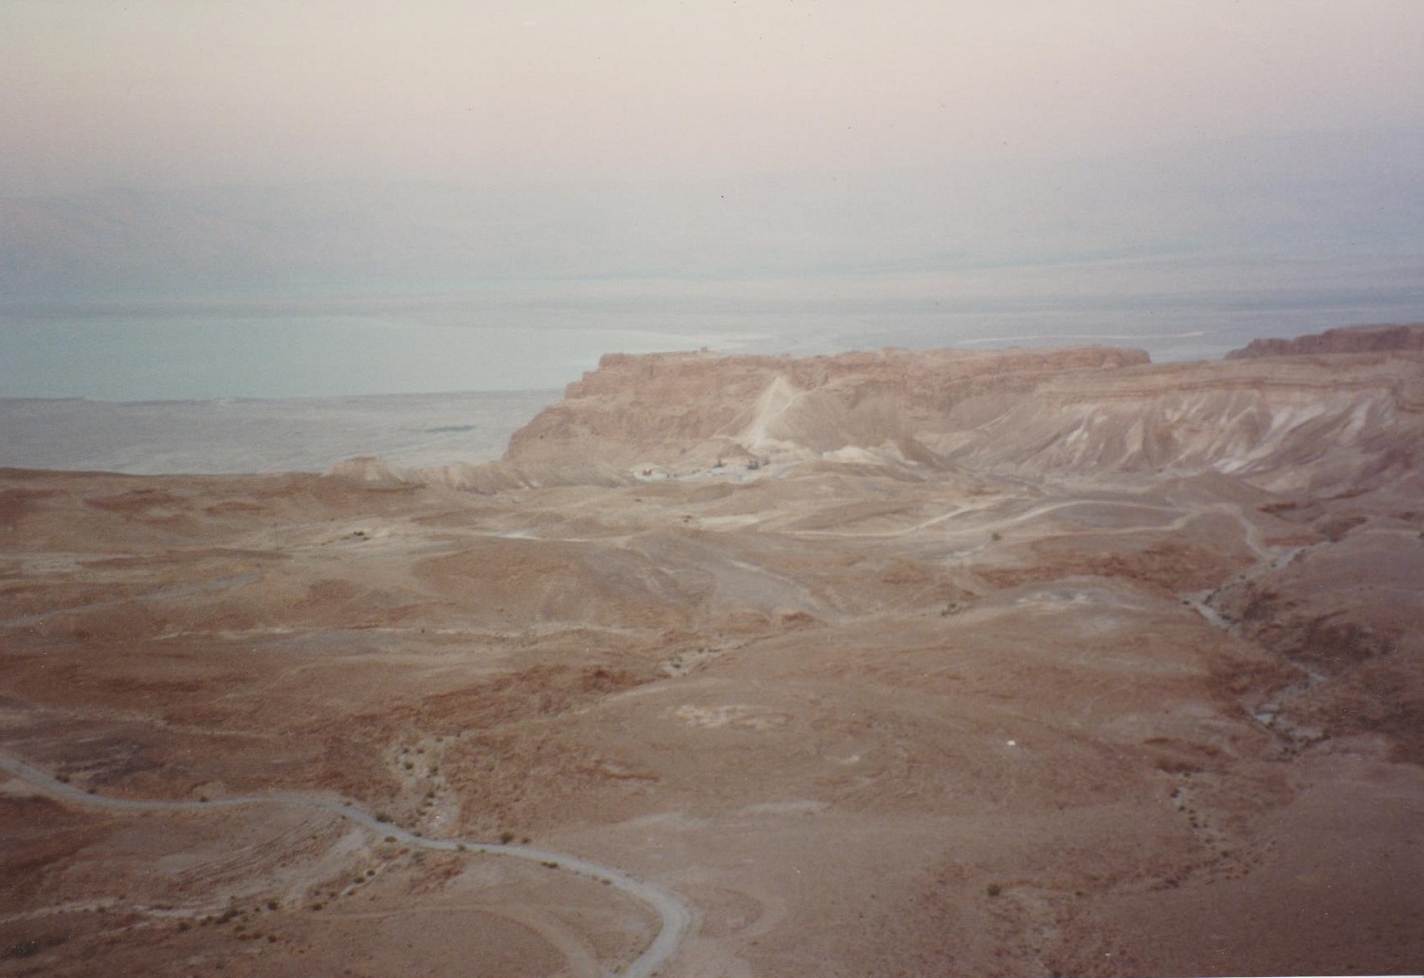 LINK - Masada, Bedouin, Landscape